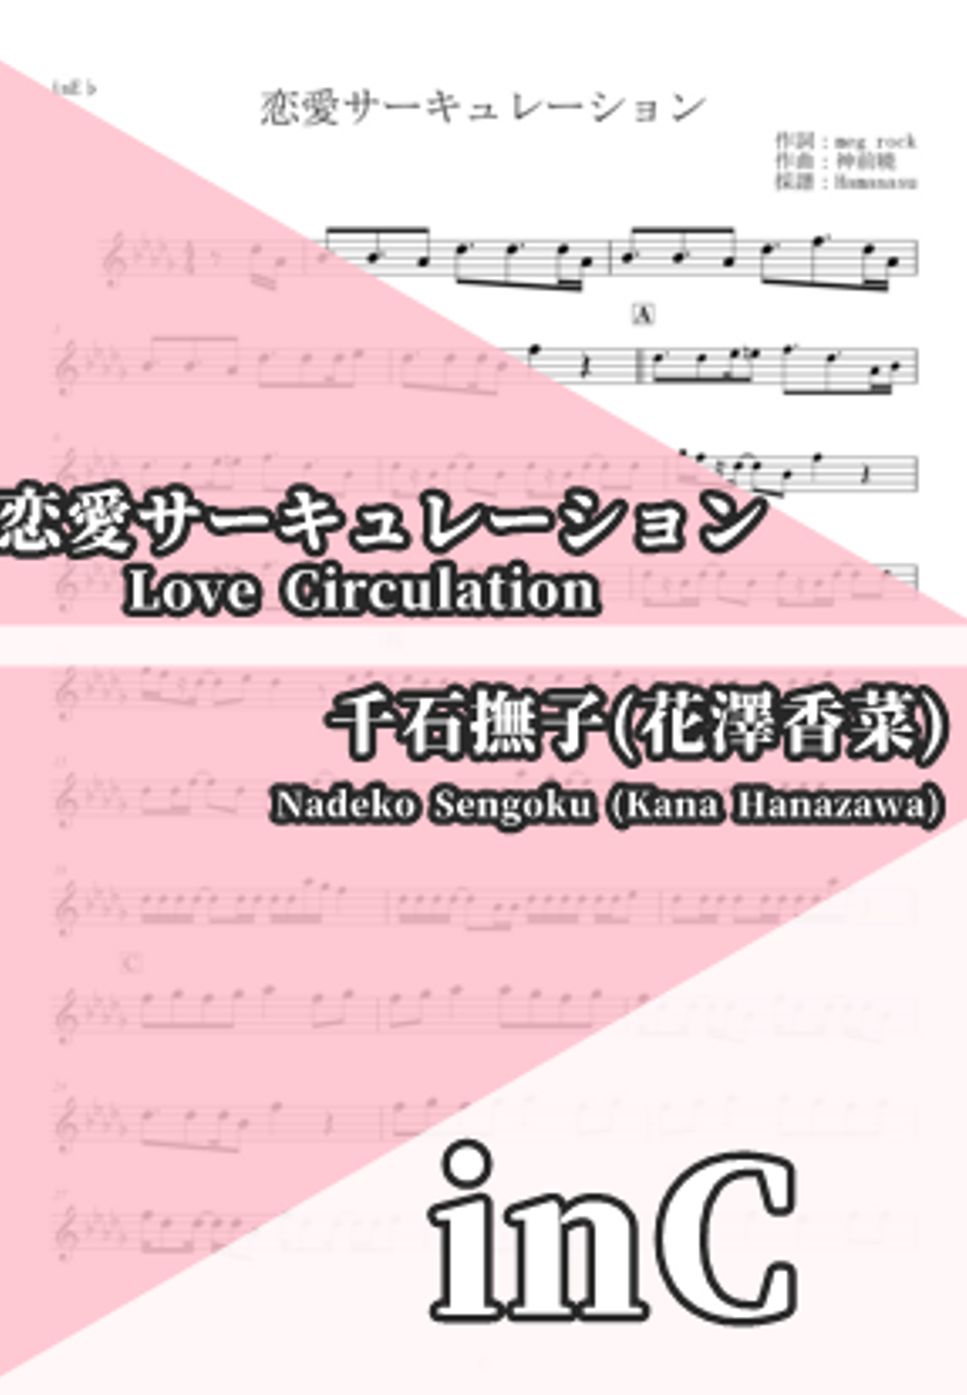 Nadeko Sengoku (Kana Hanazawa) - Love Circulation (inC) by Hamanasu